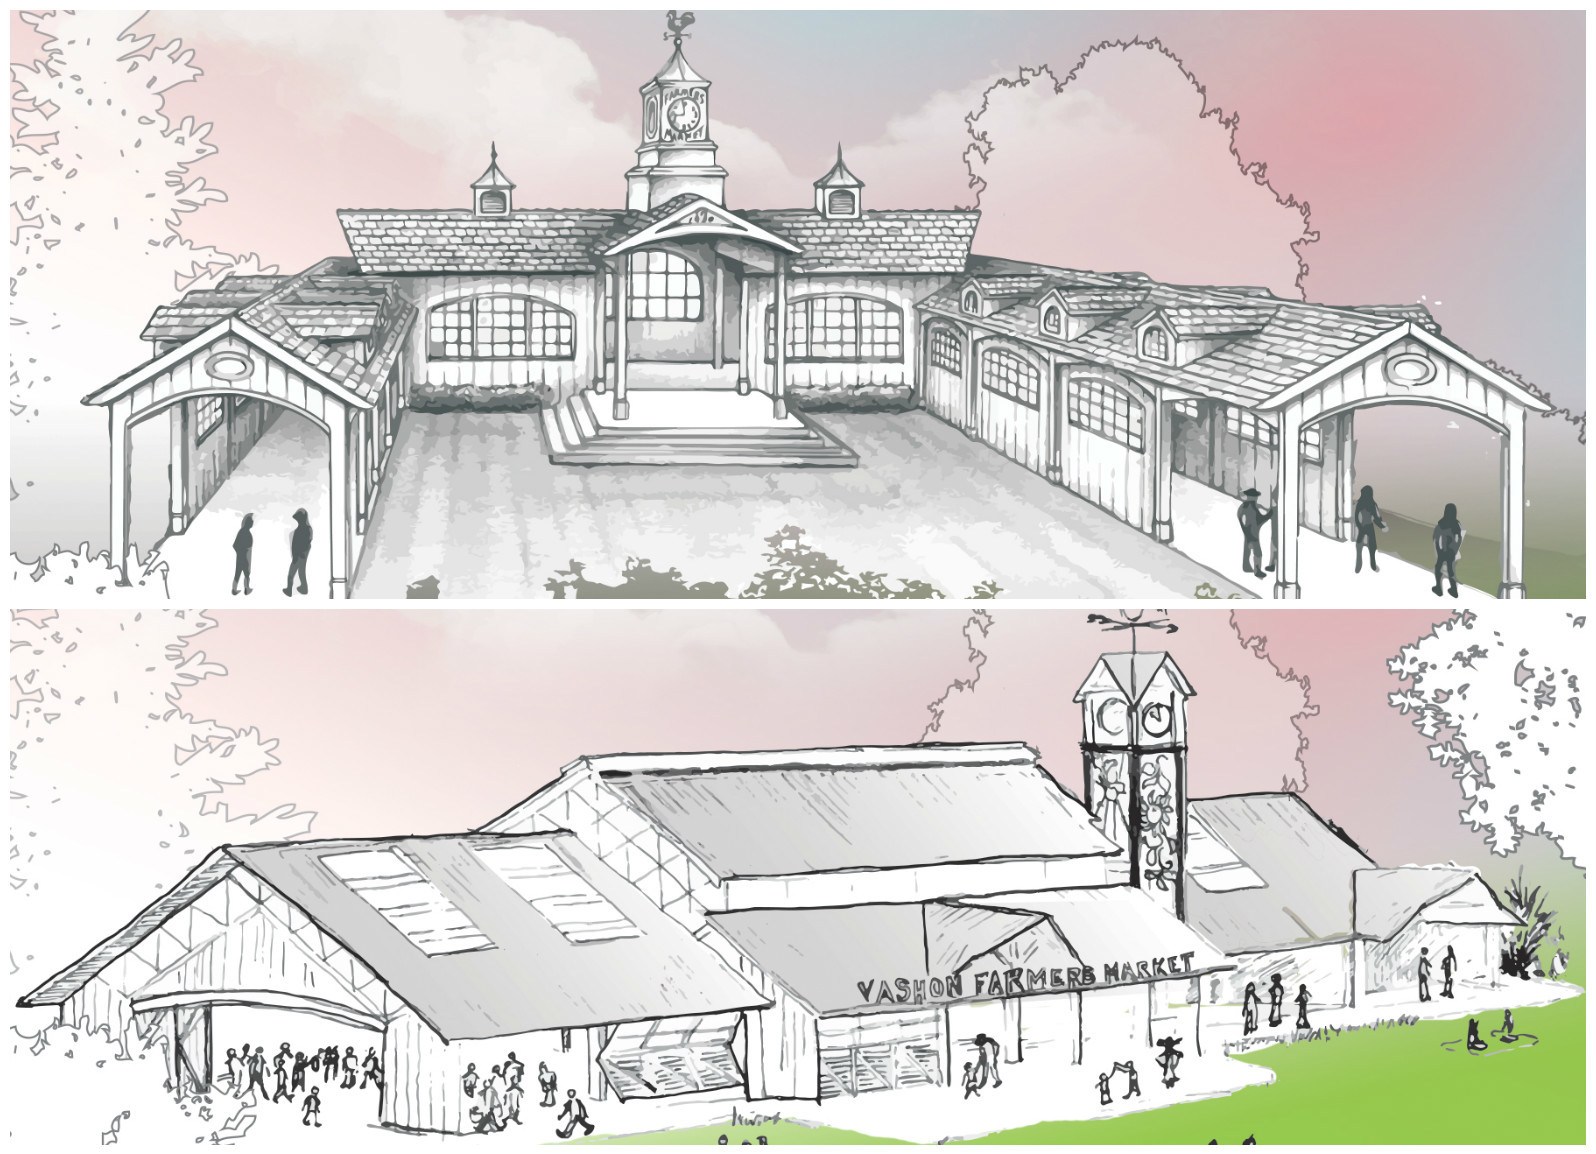 Top: Islander and farmer Luke Sheard’s design for a potential new farmers market structure.